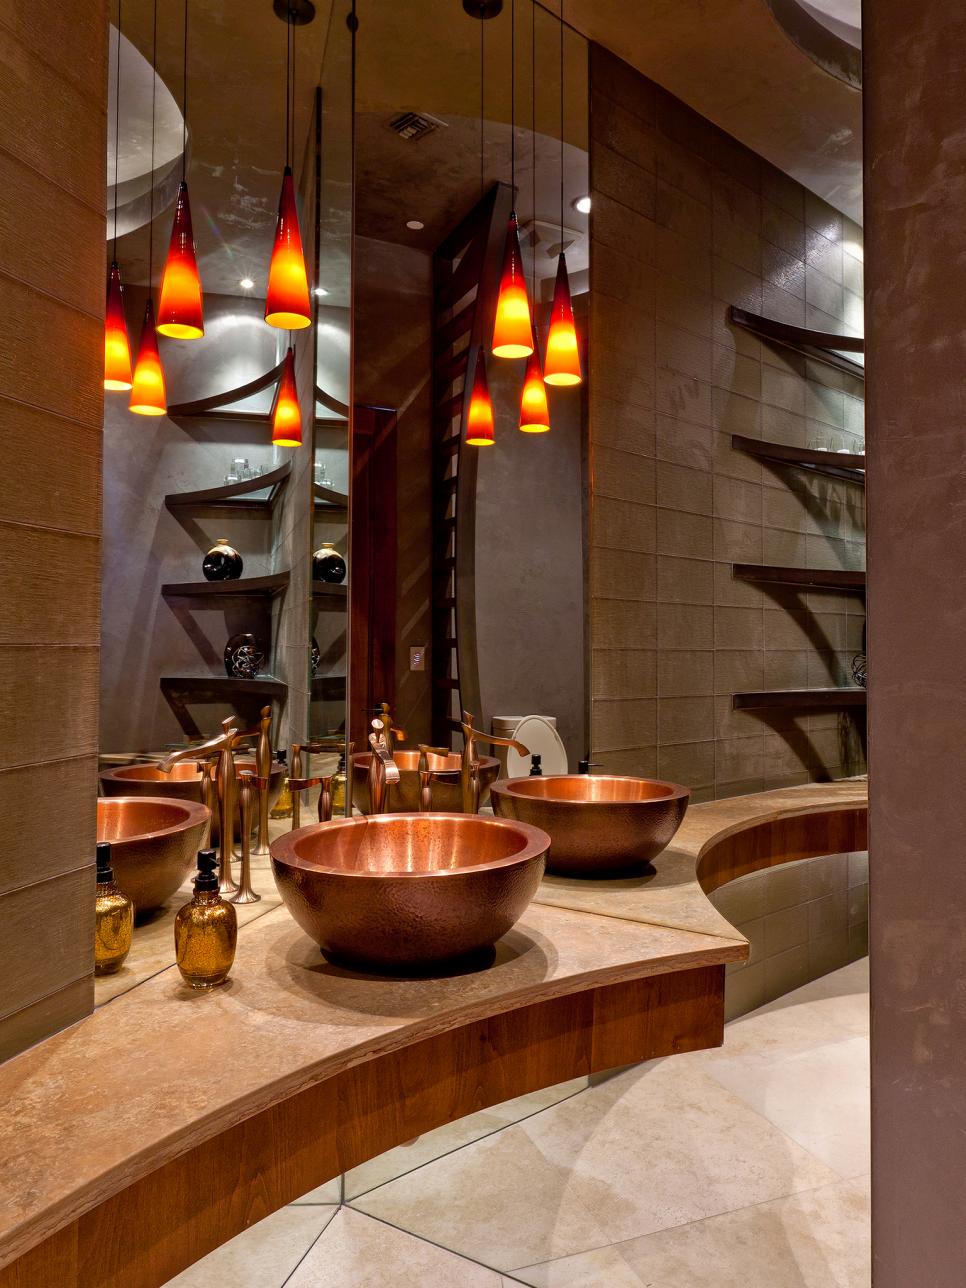 25 Southwestern Bathroom Design Ideas – The WoW Style